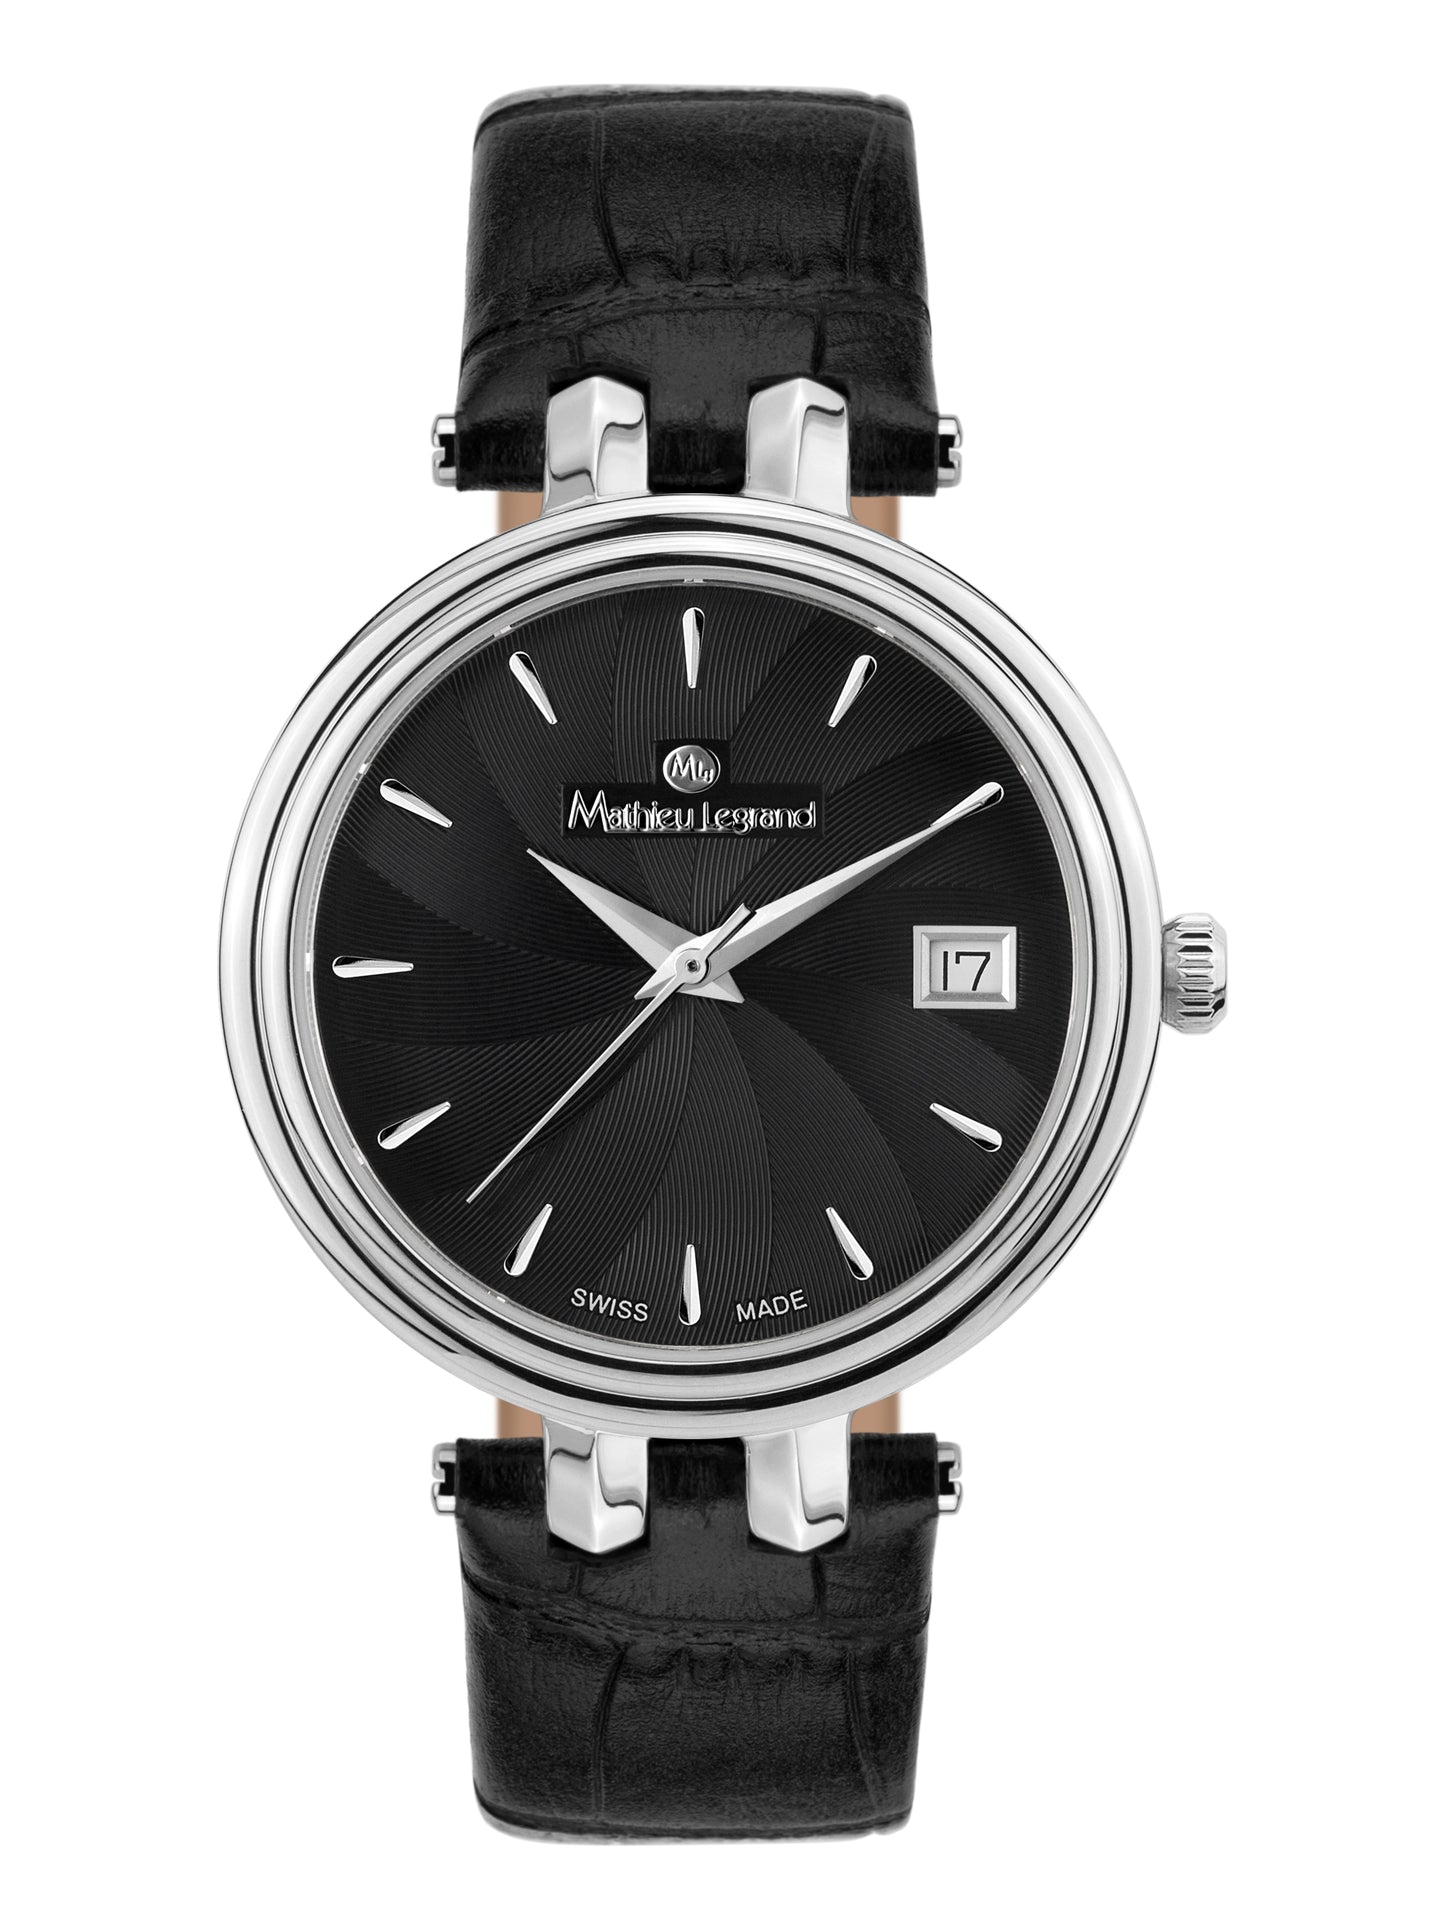 Automatic watches — Rayon de Lune — Mathieu Legrand — steel black